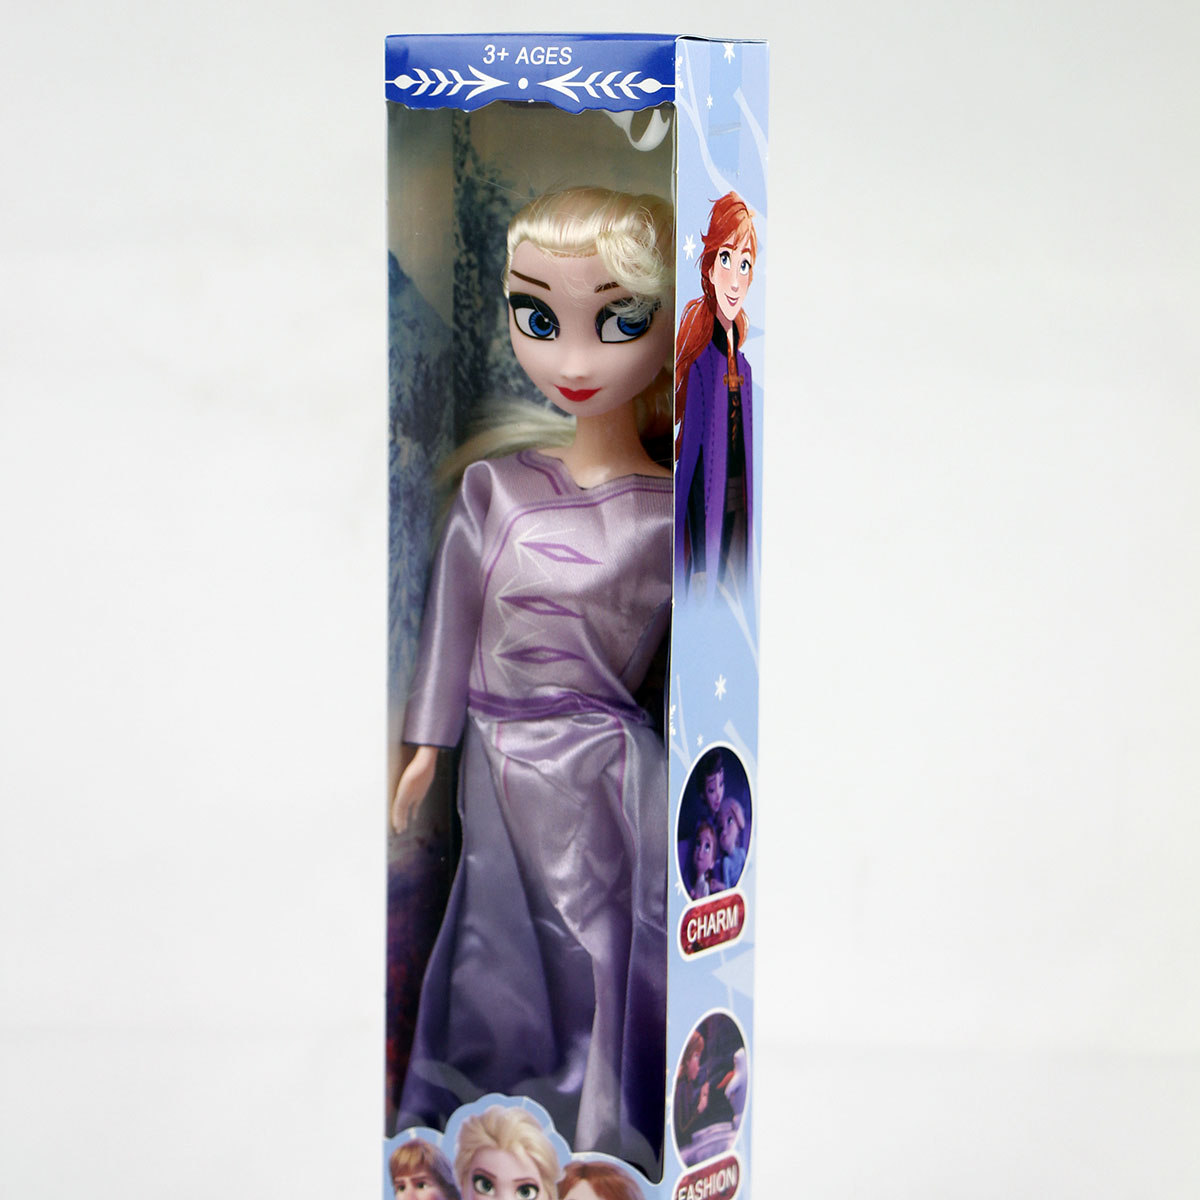 Frozen Anna & Elsa Girls Play Dolls เล่นตุ๊กตา เซนติเมตรวันเกิดเจ้าหญิงแช่แข็งตุ๊กตาของขวัญยัดไส้ Pelucia เอลซาและแอนนาน่ารักยัดไส้ของเล่นร้อนคริสต์มาส giftn